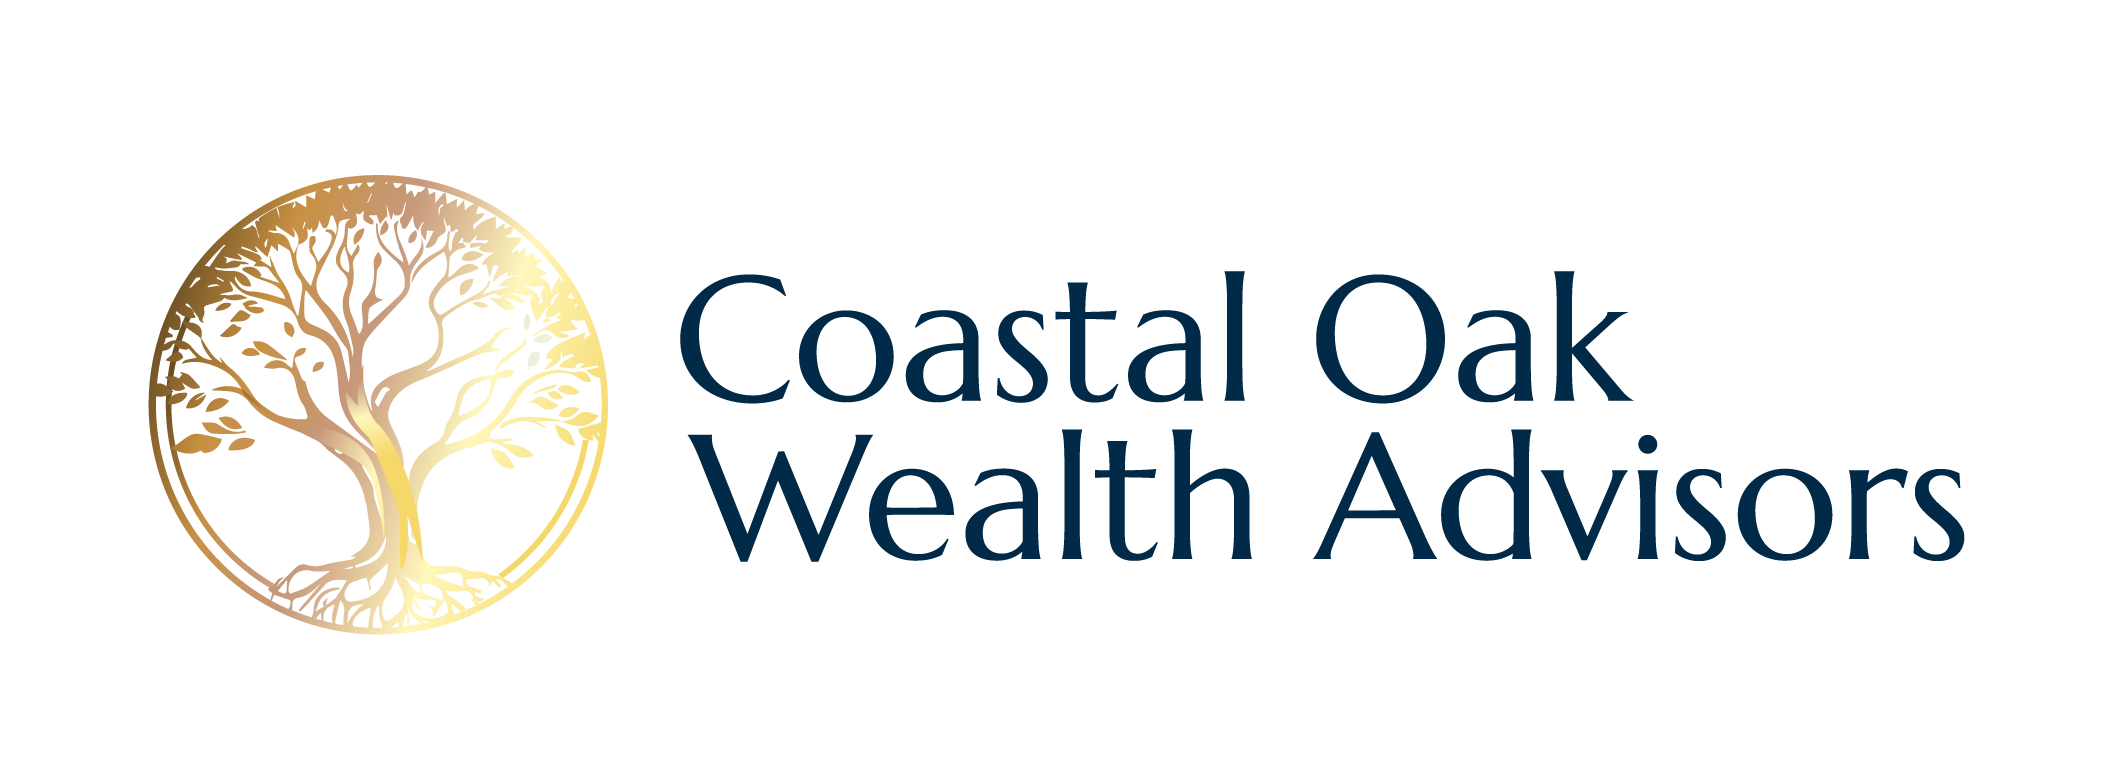 Coastal Oak Wealth Advisors